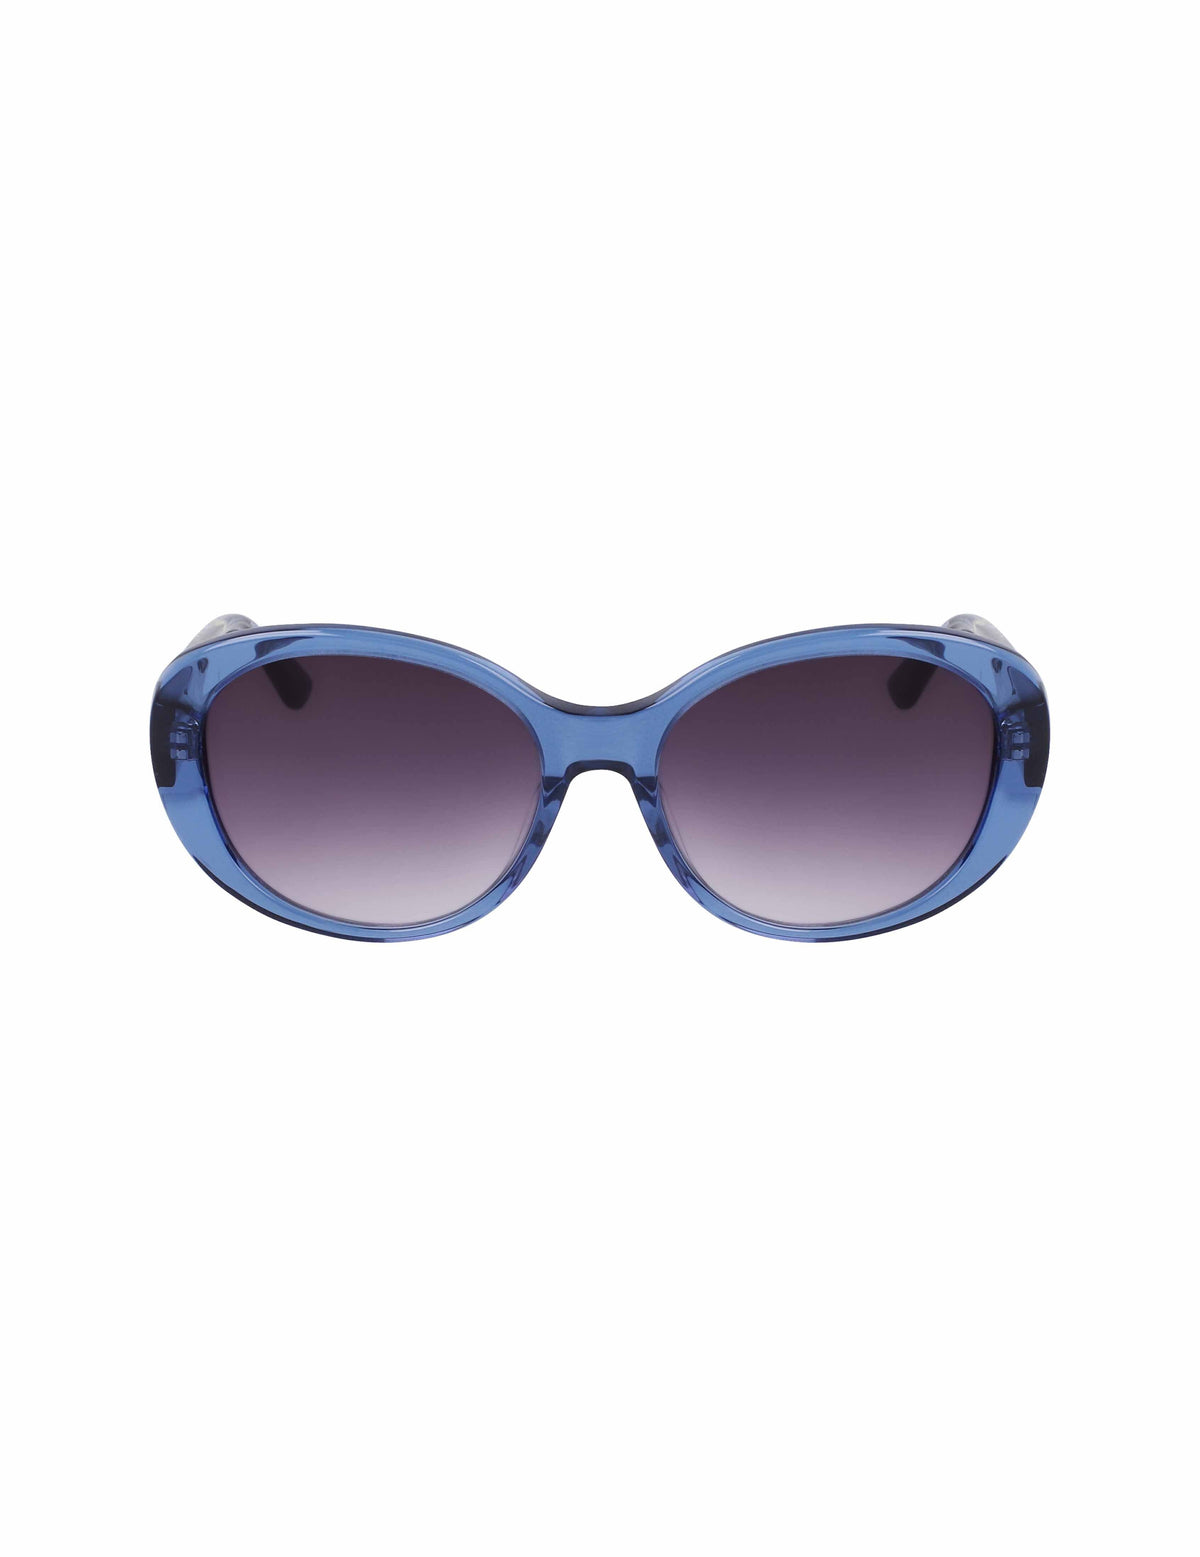 Anne Klein Blue Crystal Crystal Glamorous Oval Sunglasses